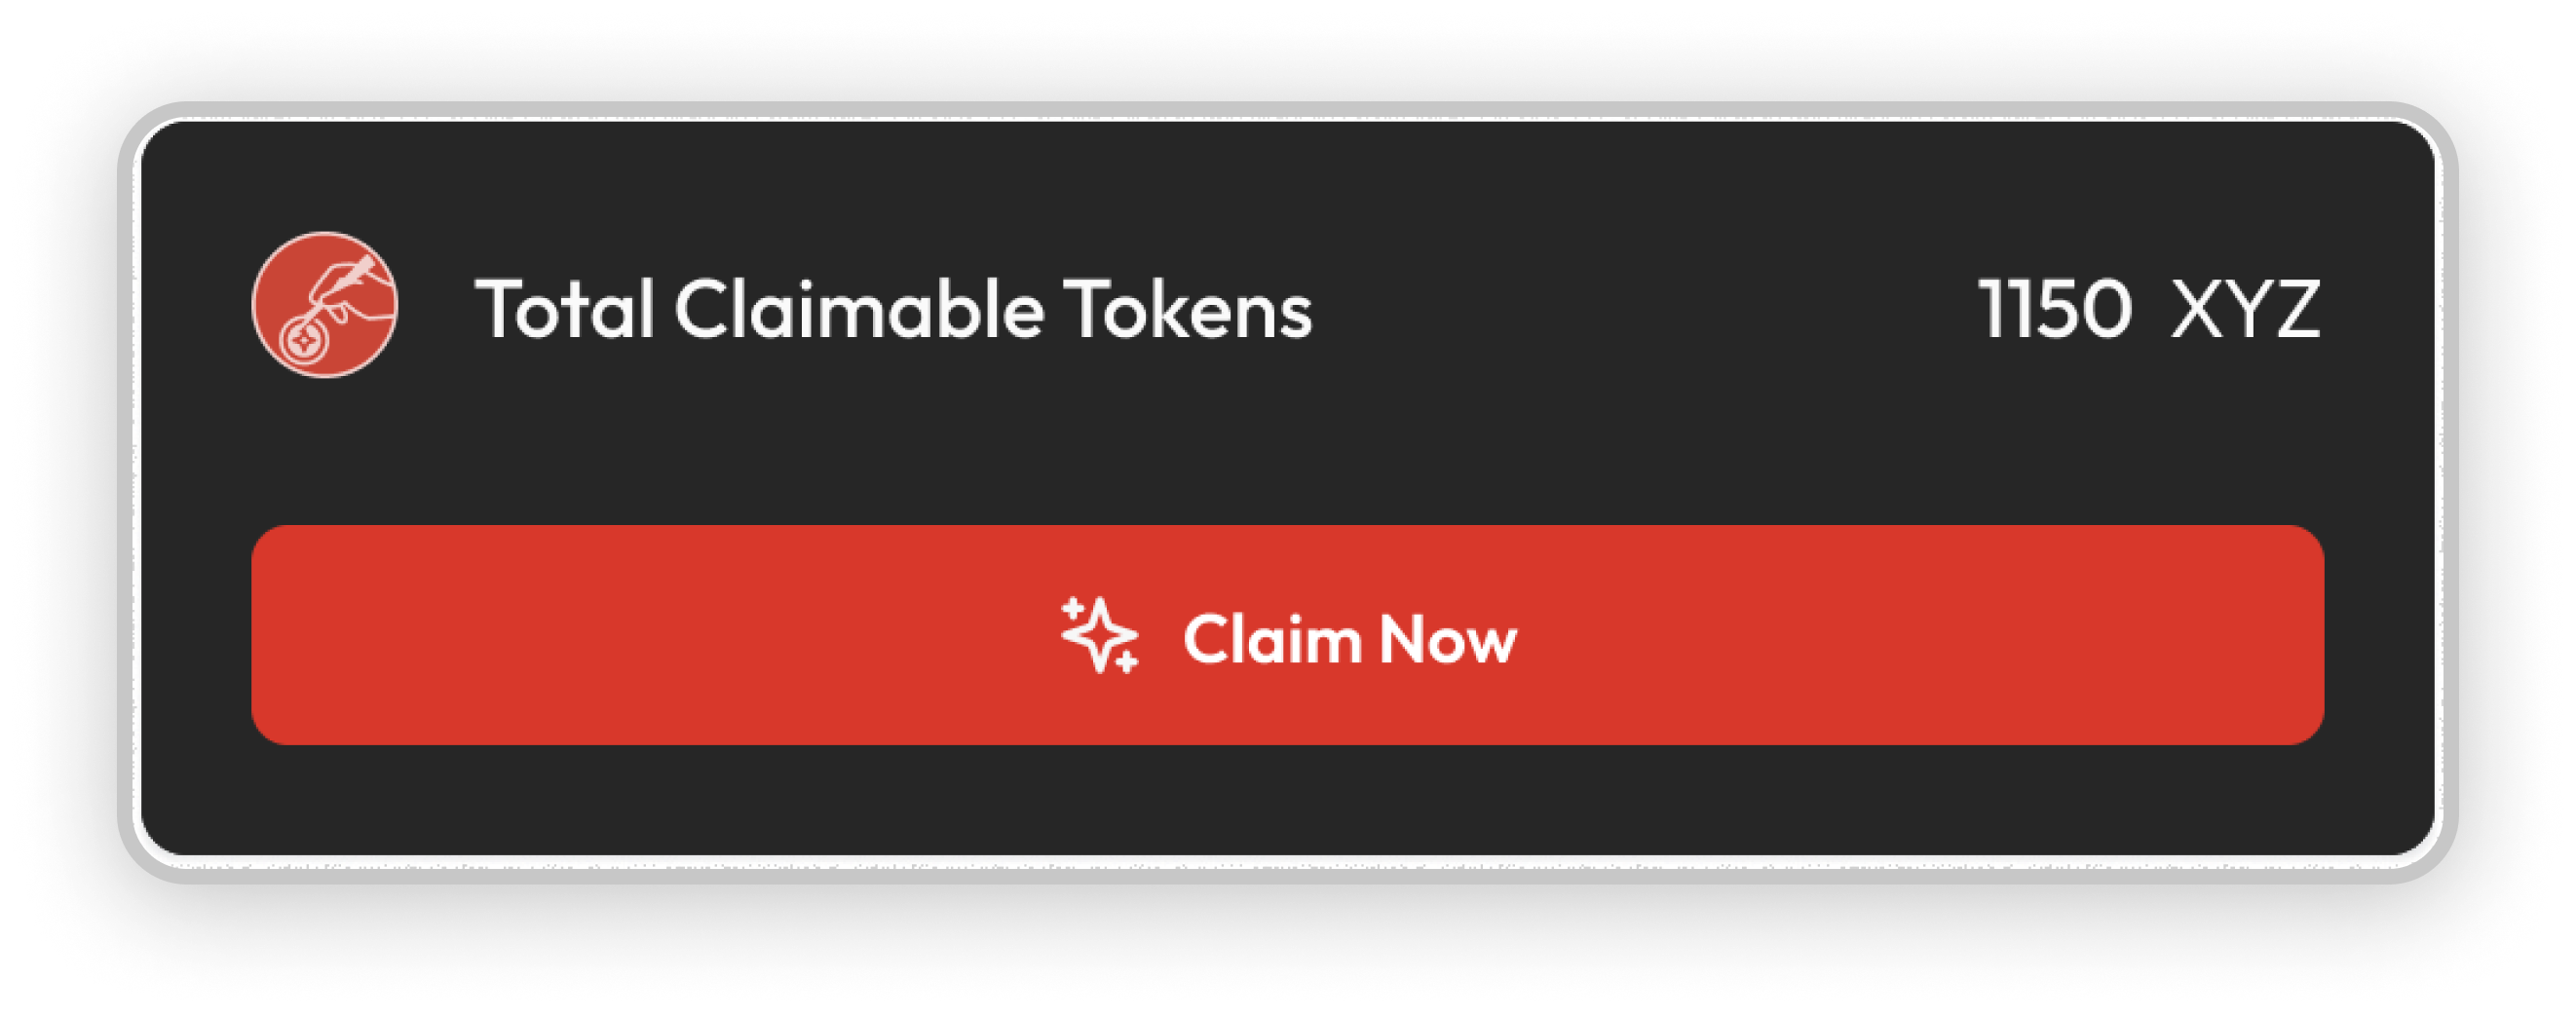 claimbale-token